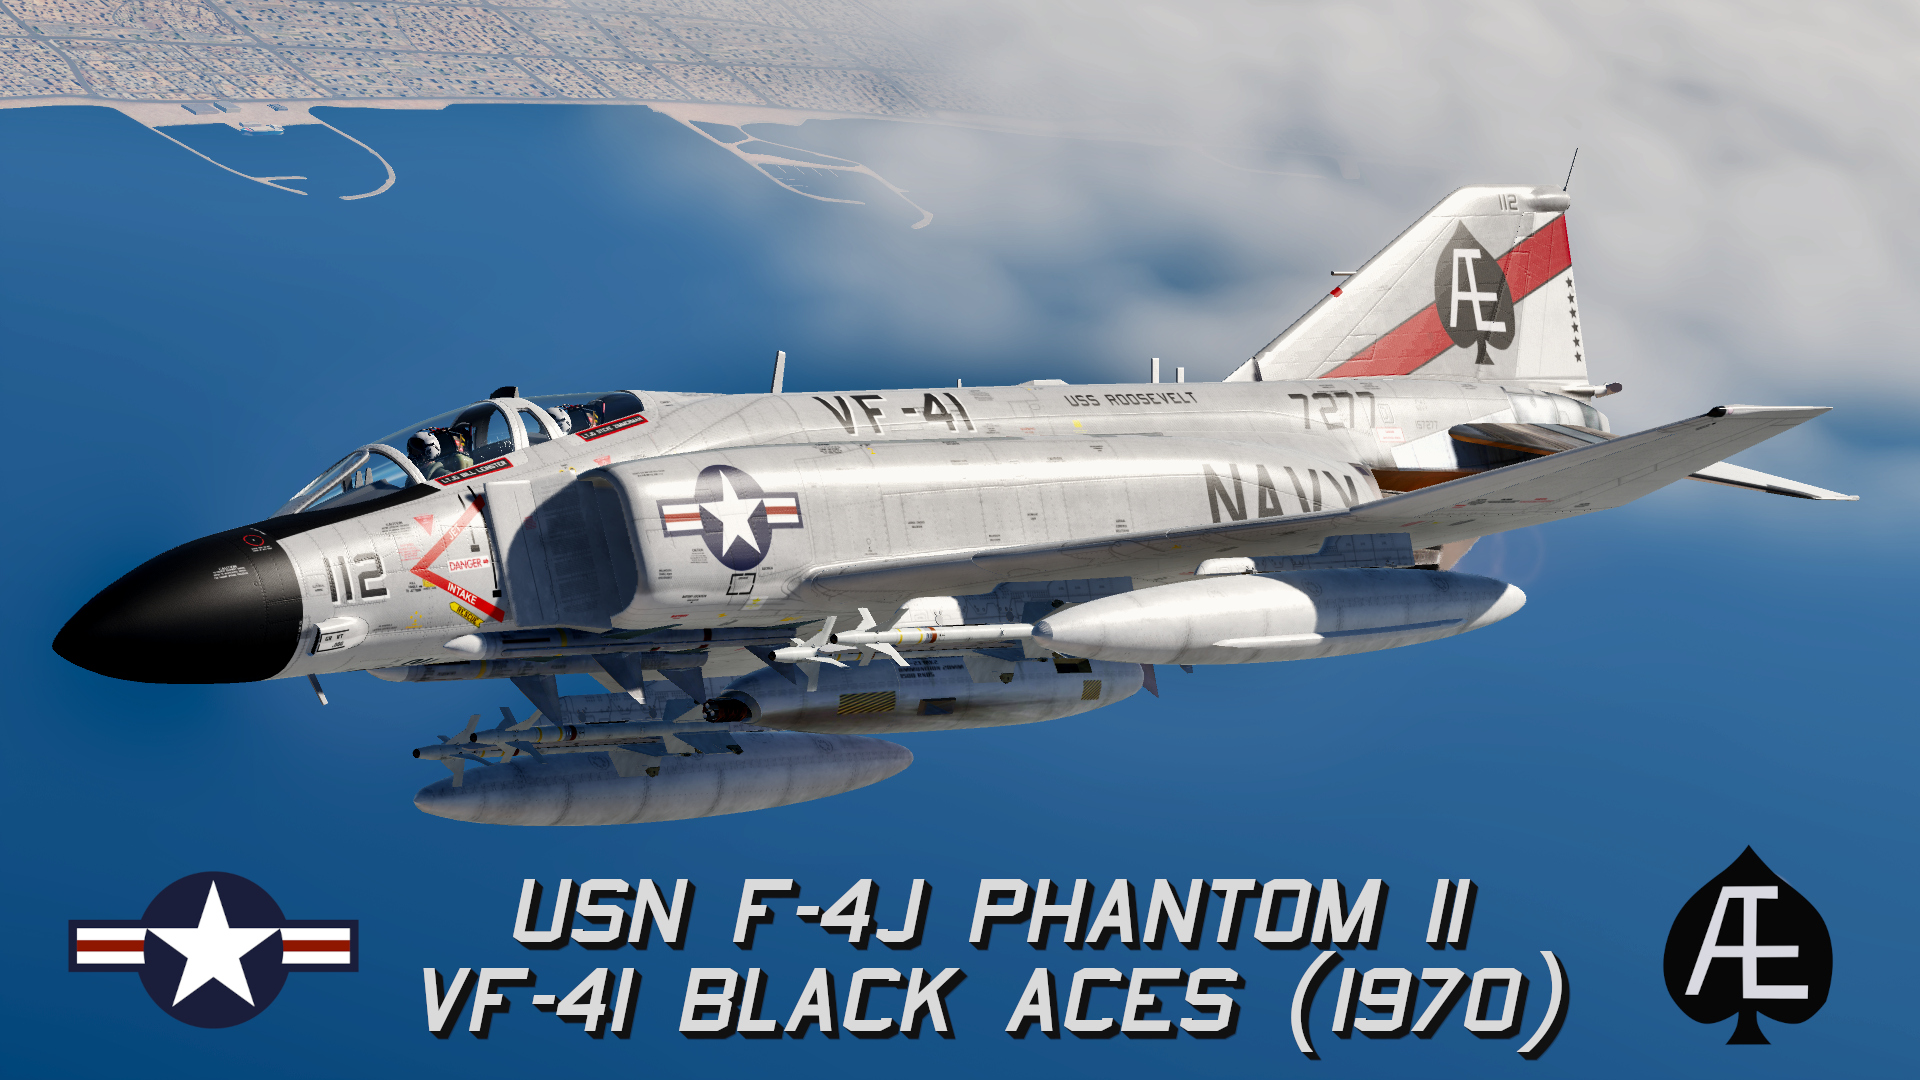 USN F-4J Phantom II VF-41 Black Aces BuNo 157277 circa 1970 (VSN F-4B/C)